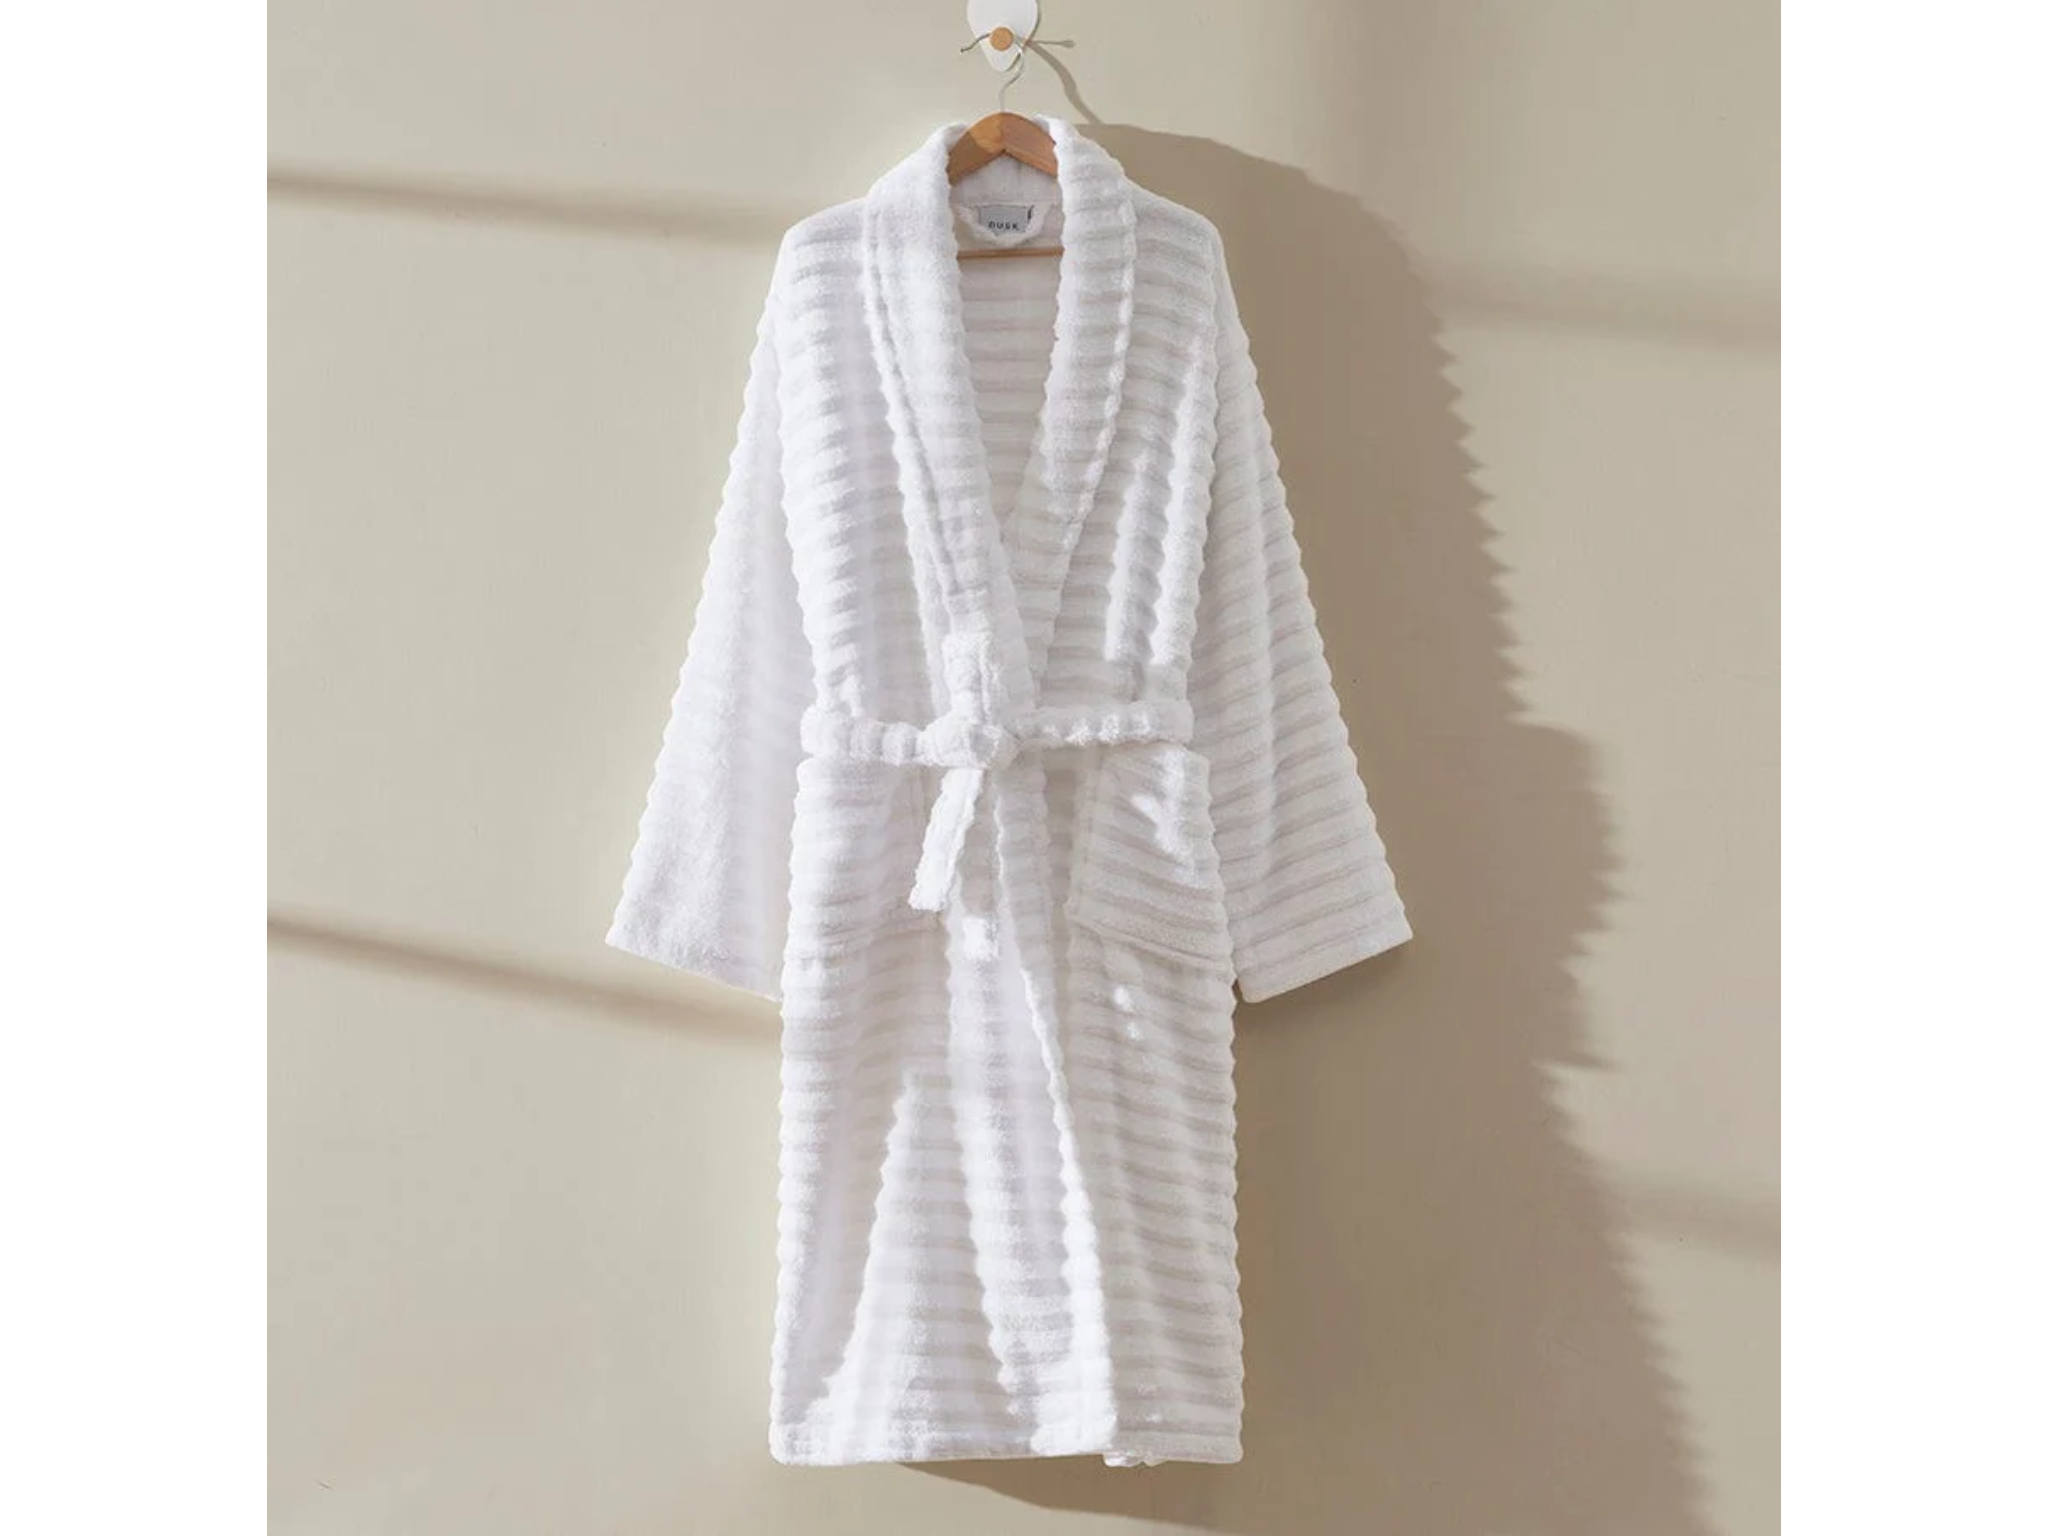 dusk-bathrobe-indybest-stocking-filler-for-her